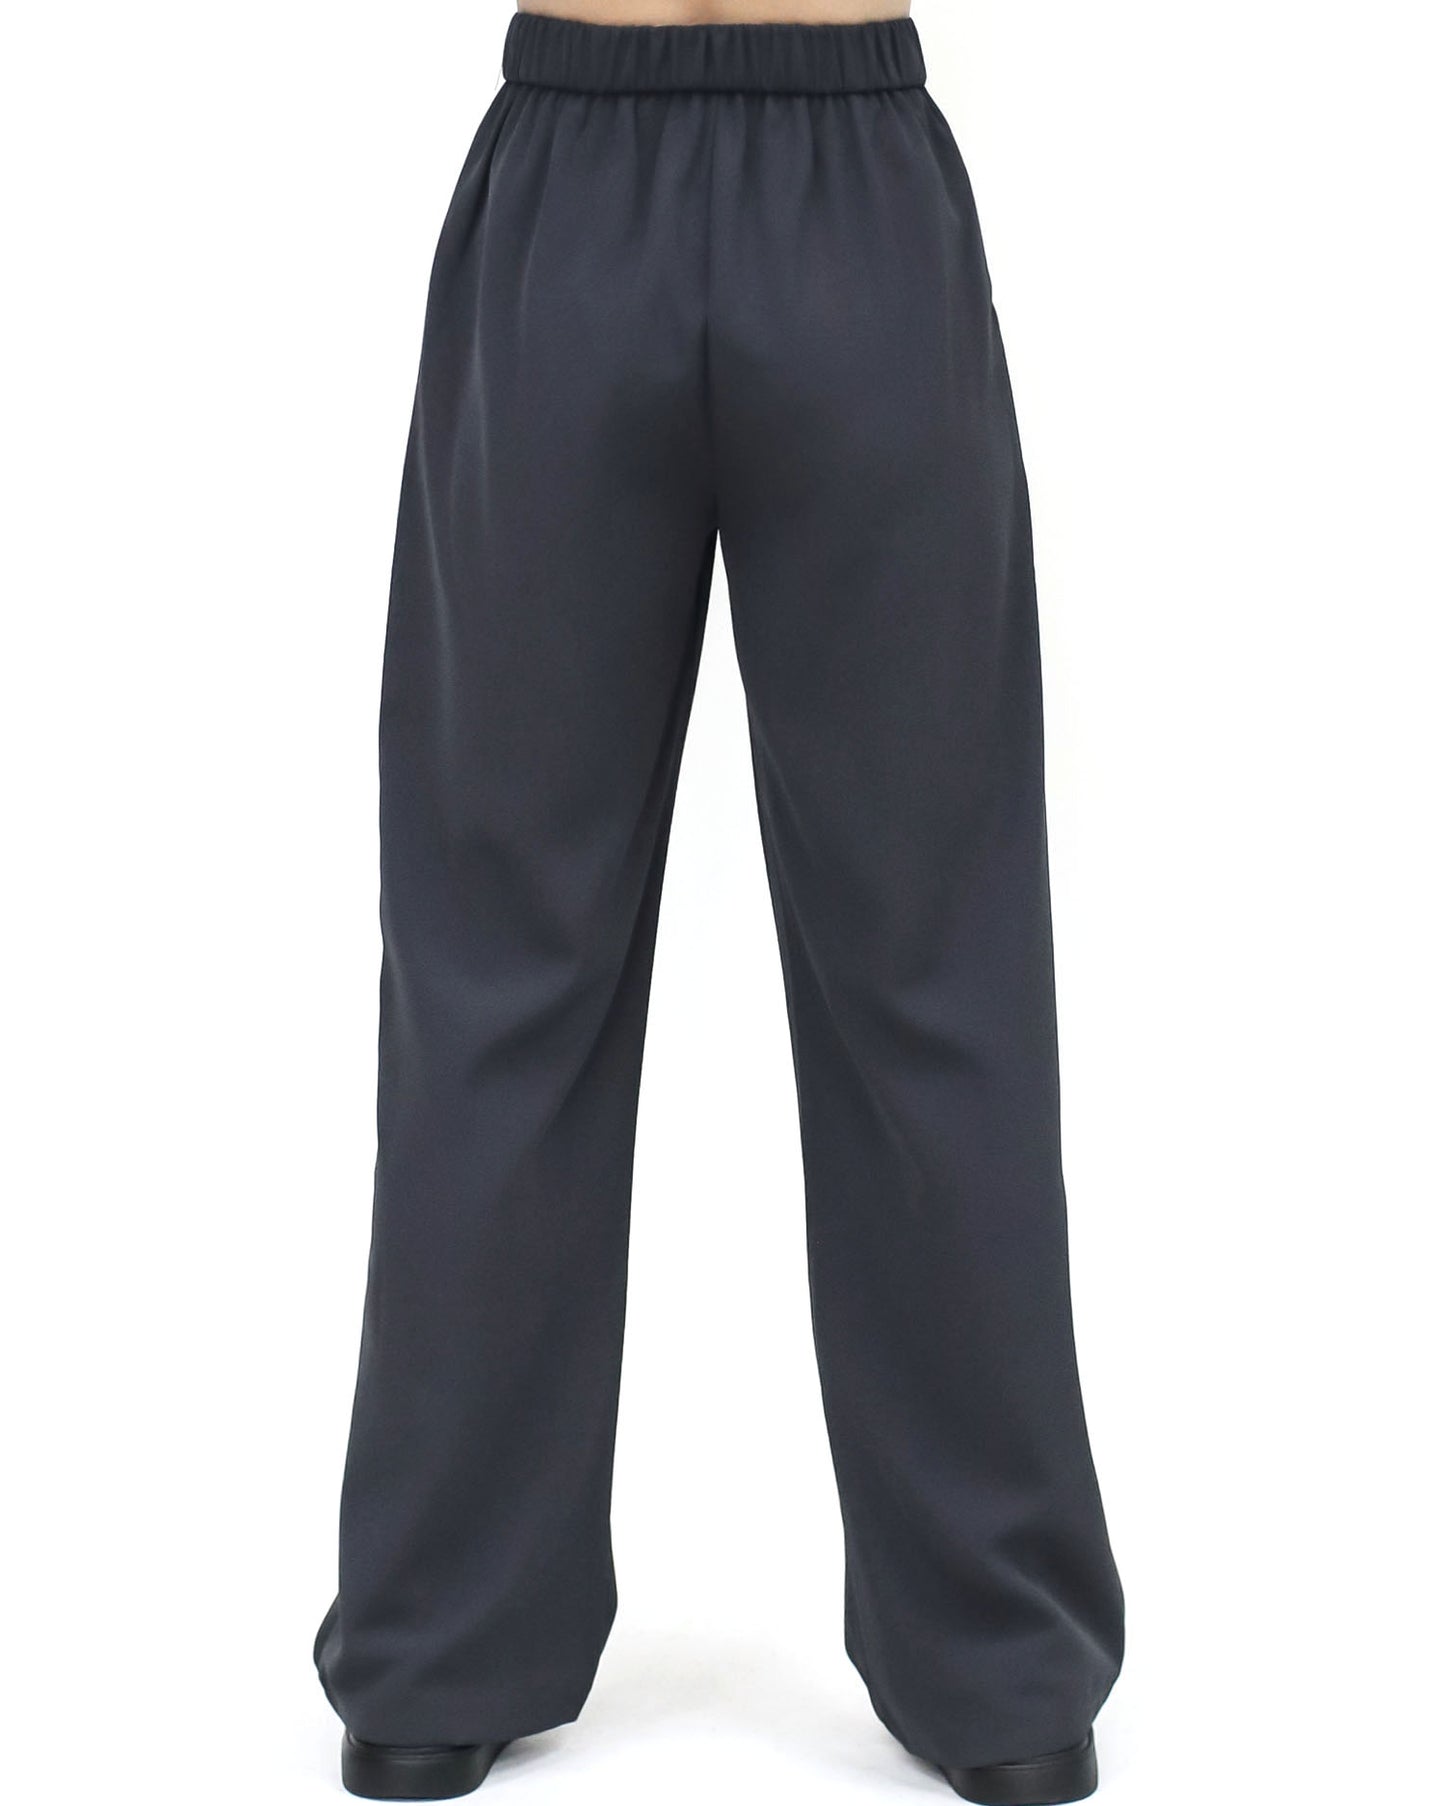 grey slinky w/ stripes inner blazer & pants set *pre-order*